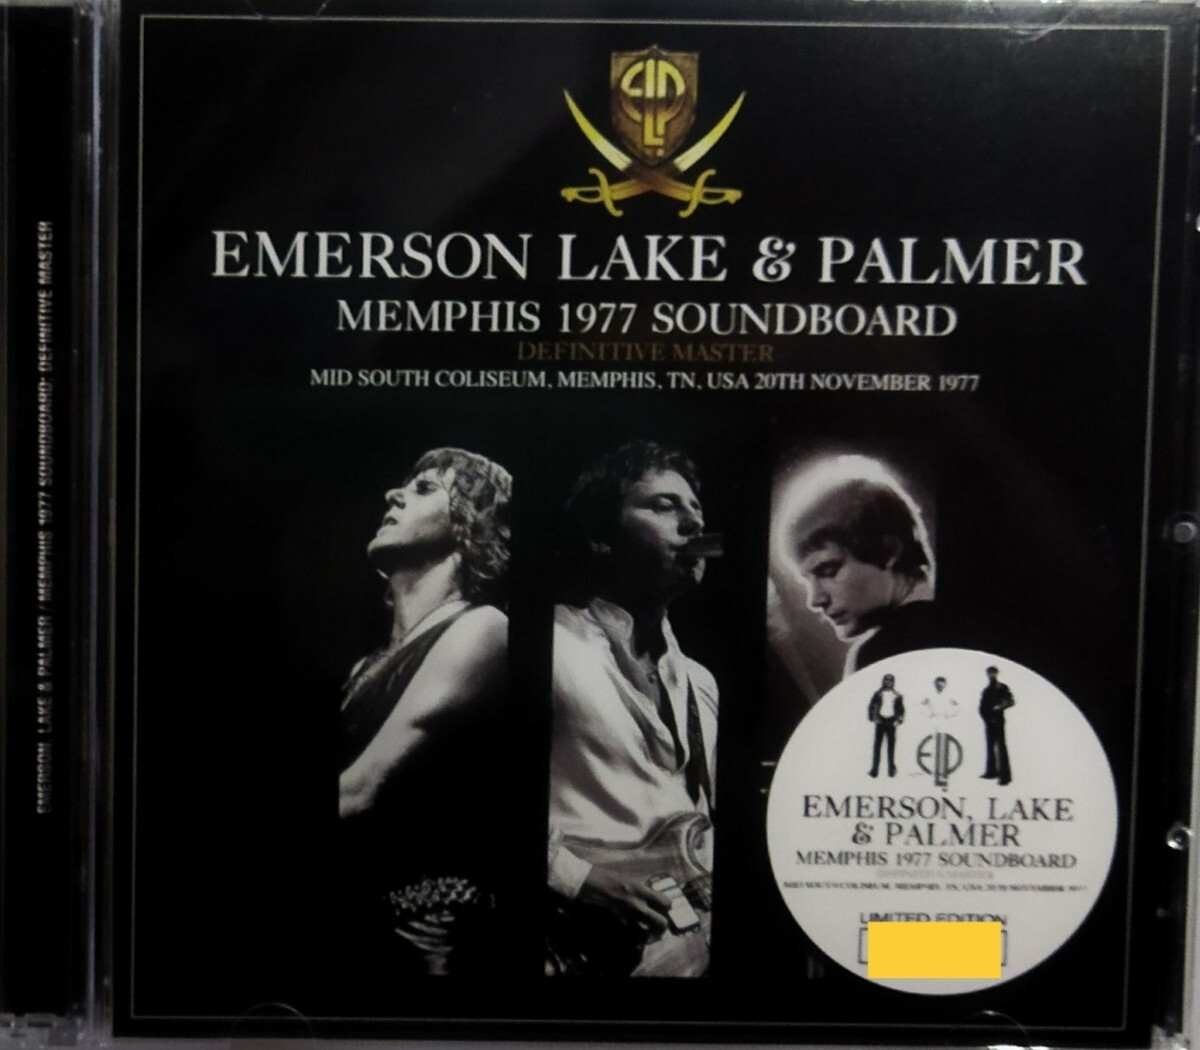 [ стоимость доставки Zero ]EL&P \'77 Soundboard Definitive Master Live Memphis USA Emerson Lake & Palmerema-son* Ray k* and * химическая завивка -